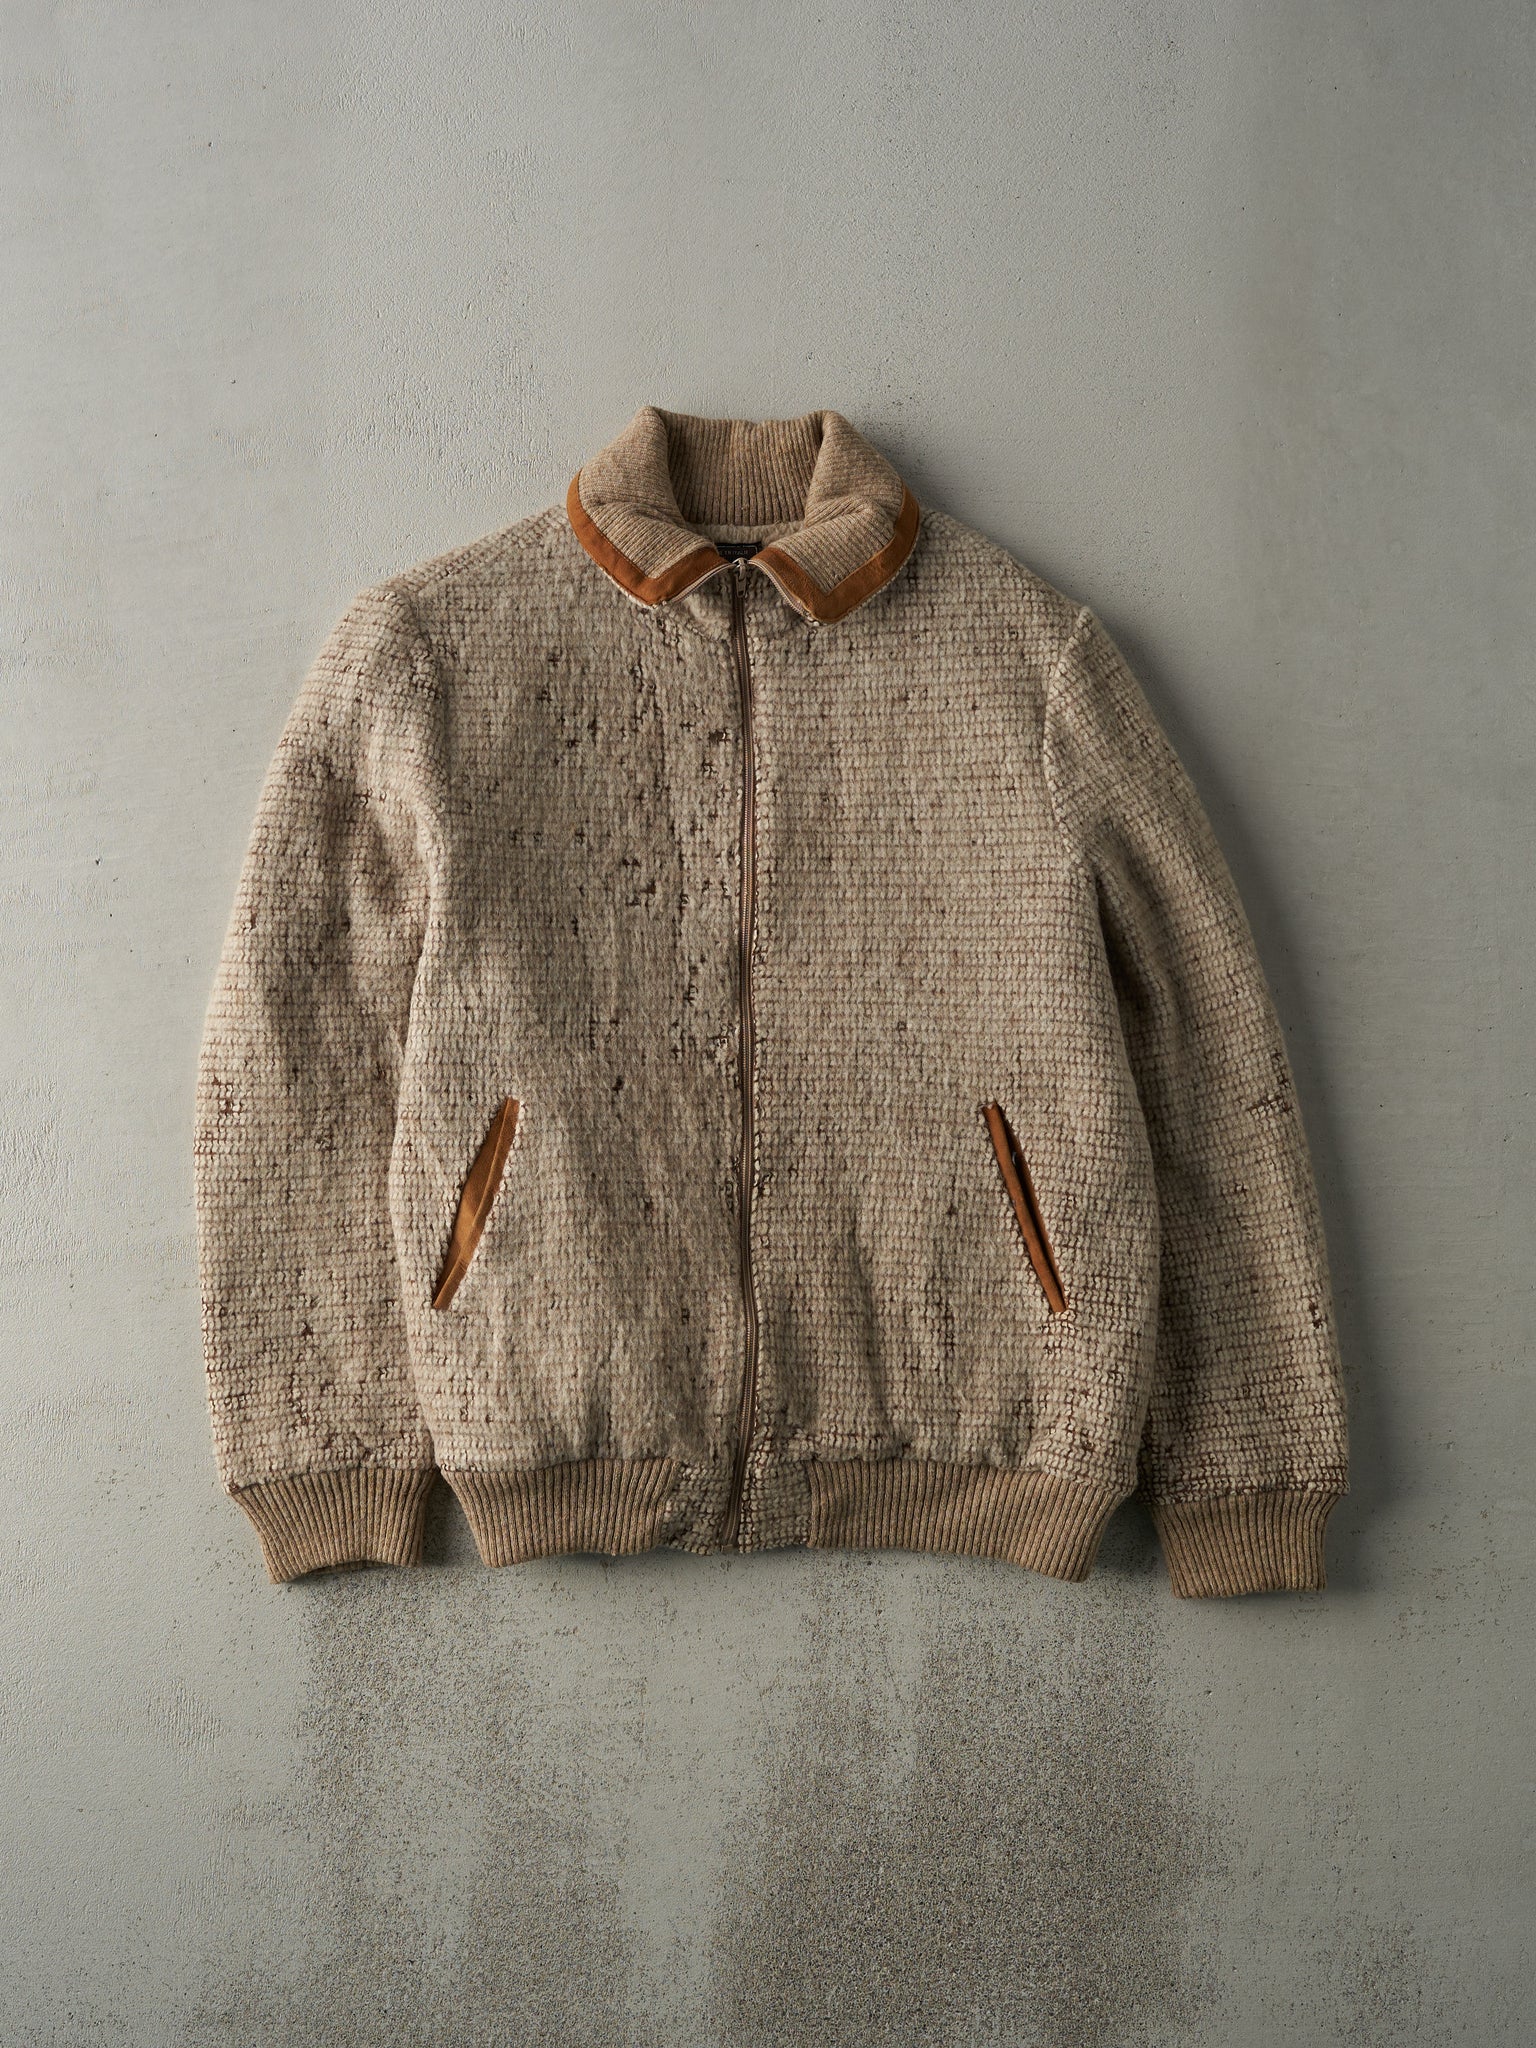 Vintage 60s Beige Marlboro Wool Knit Jacket (M)